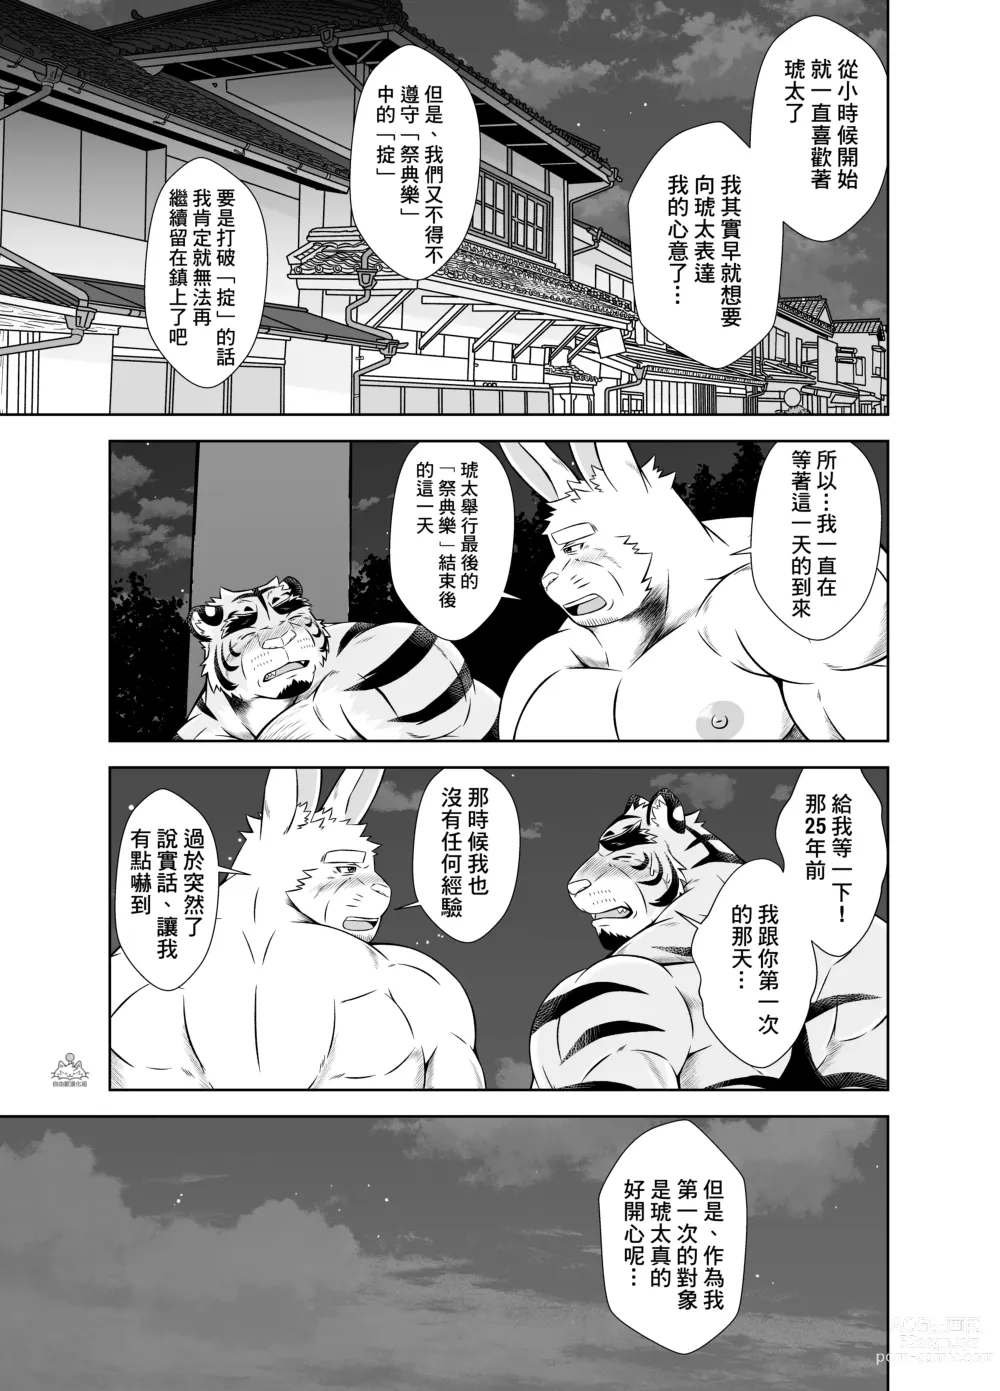 Page 51 of doujinshi 最後的祭典樂